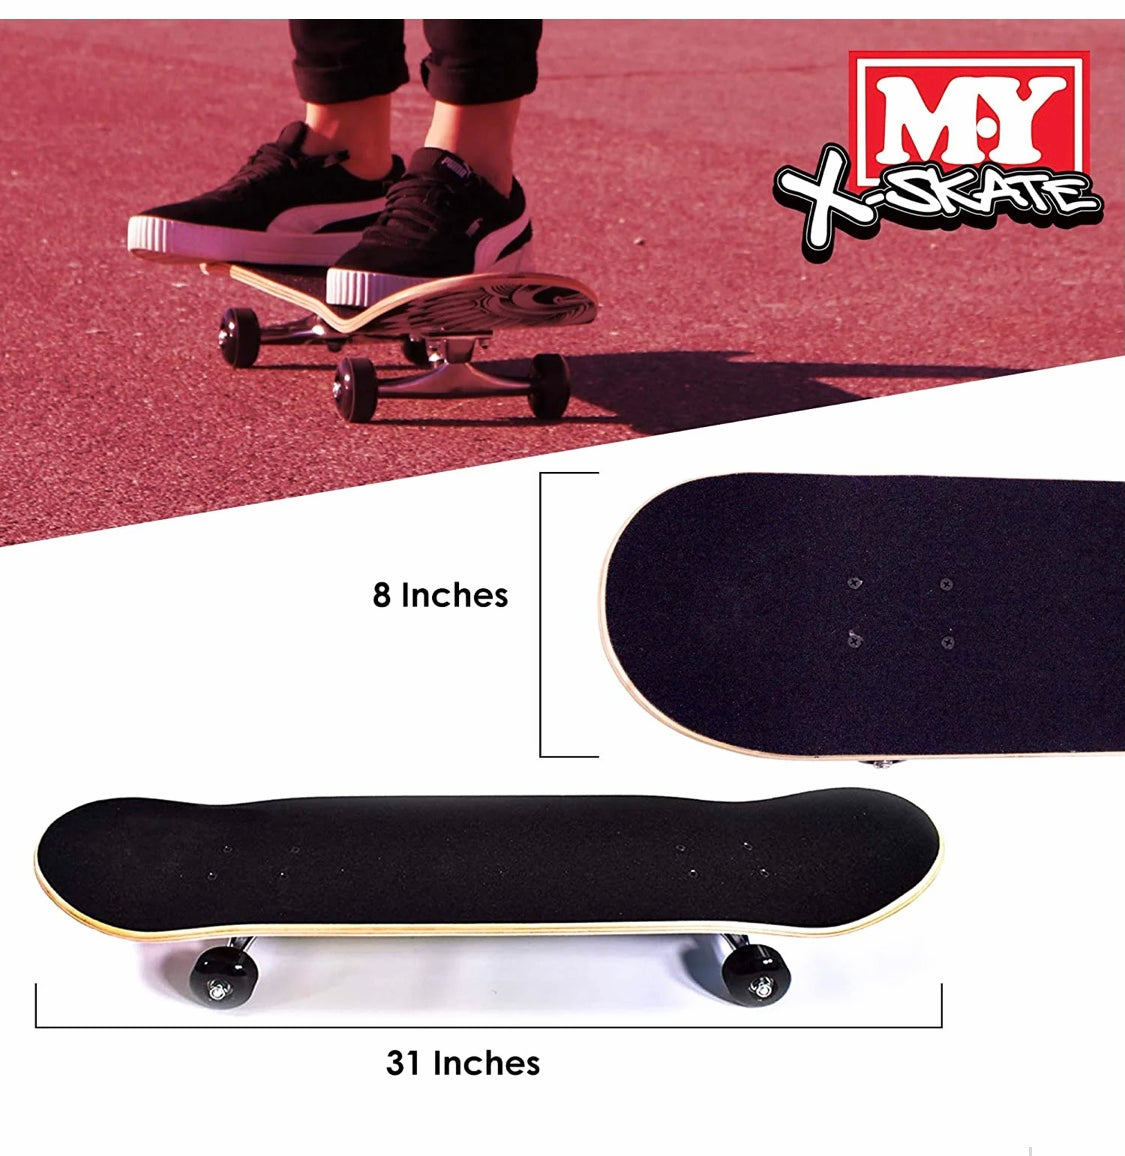 M.Y X-Skate Complete Skateboard 31